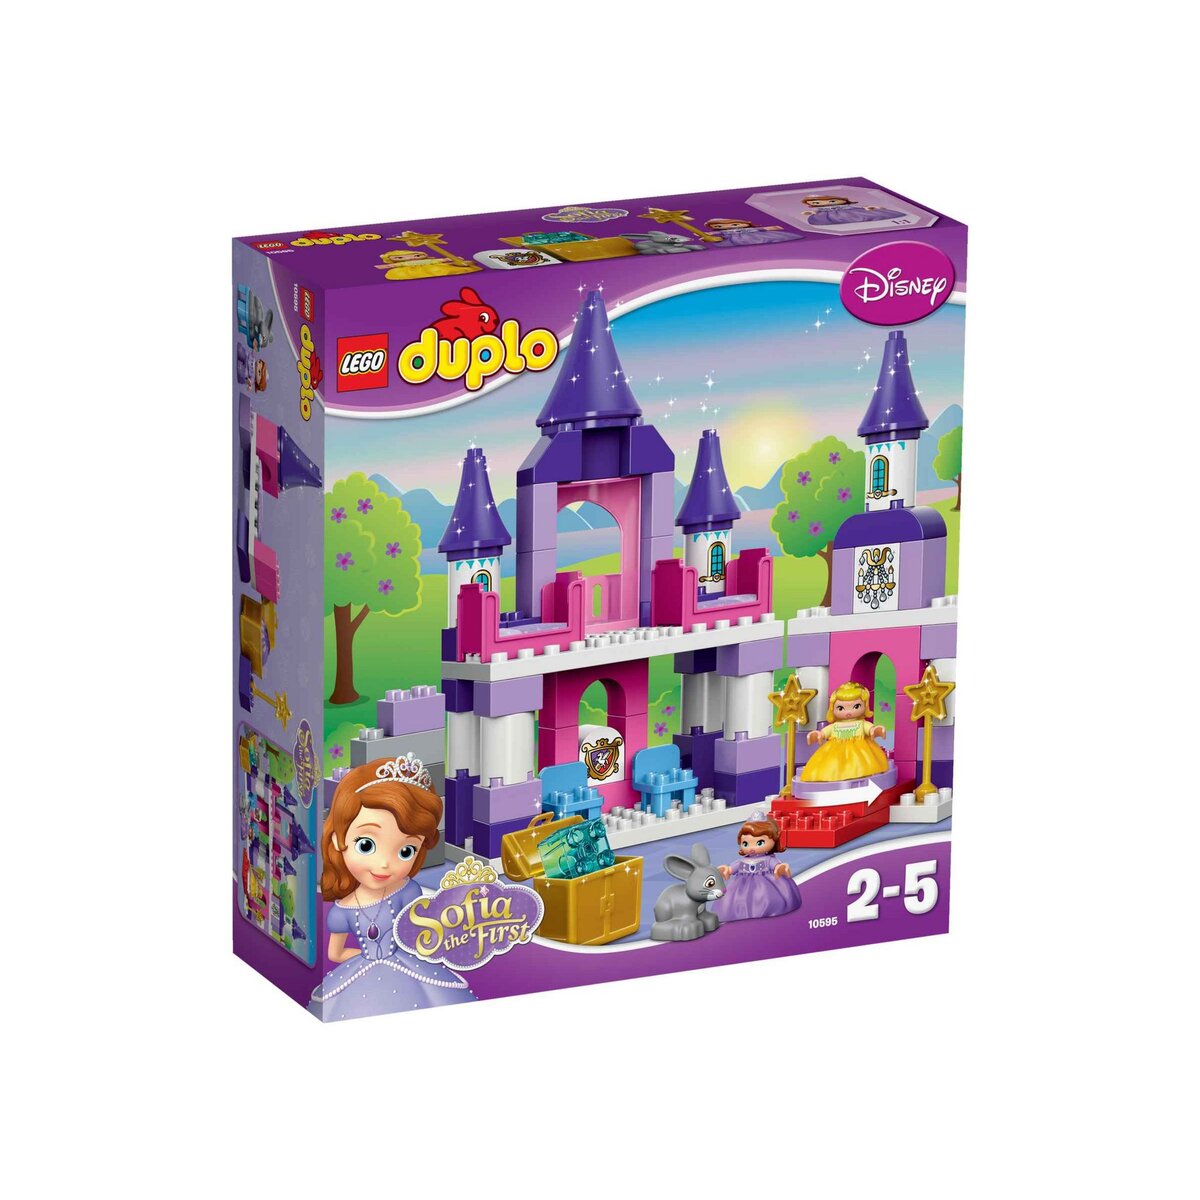 LEGO Duplo Disney Princess 10595 - Le château royal de la Princesse Sofia